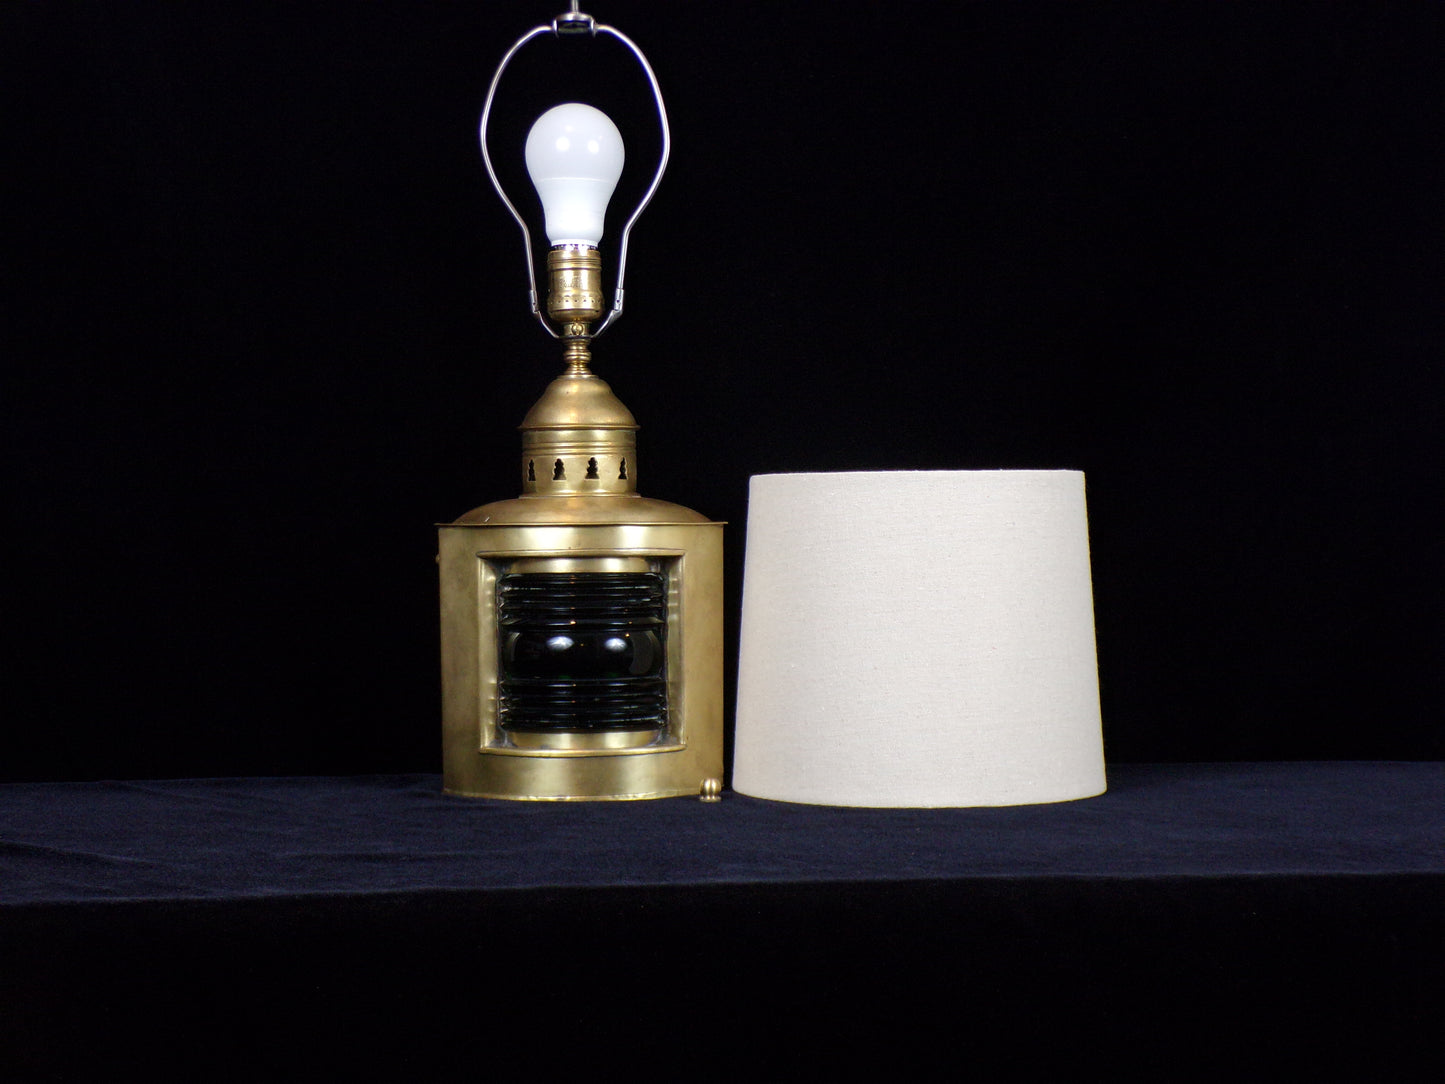 Running Light - Starboard Oil Lamp / LED Conversion